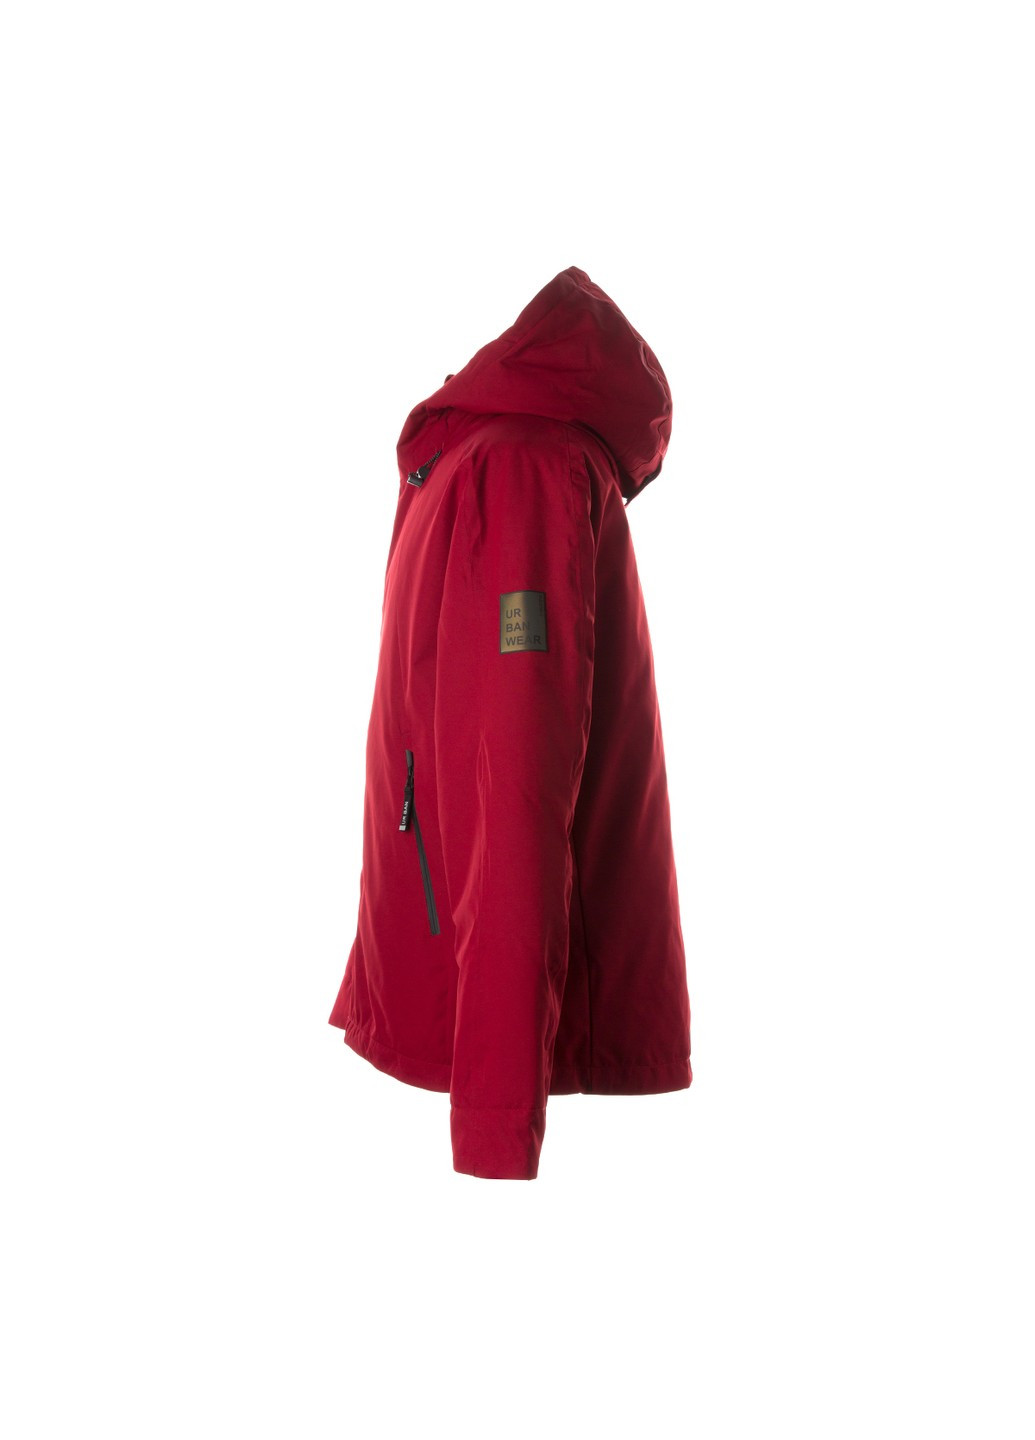 Красная зимняя куртка зимняя heikki Huppa